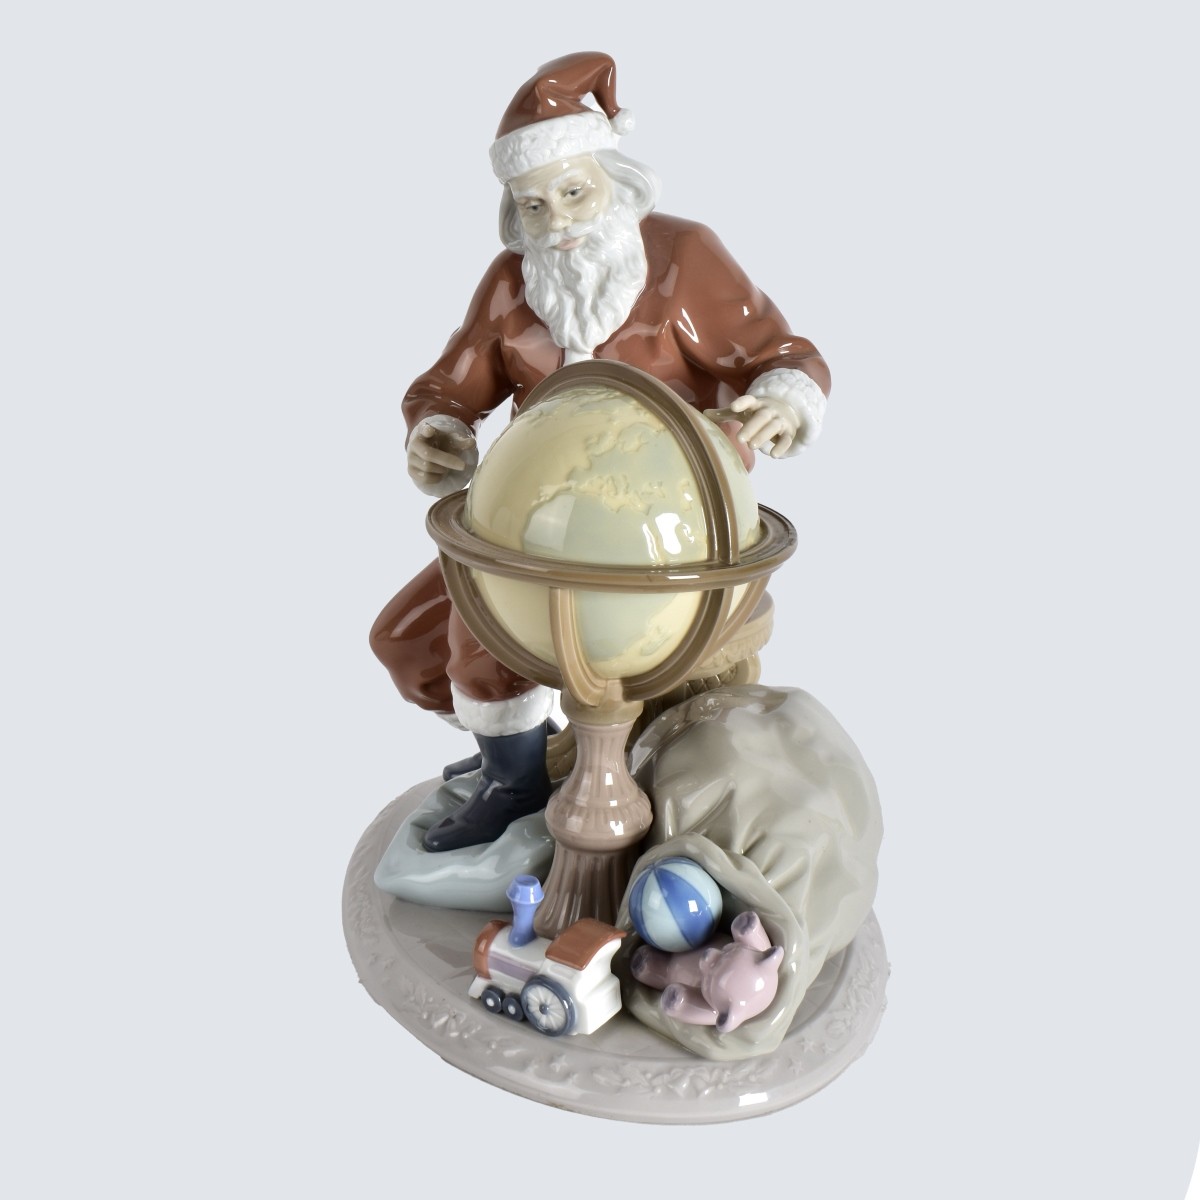 Lladro "Christmas Journey" Figurine